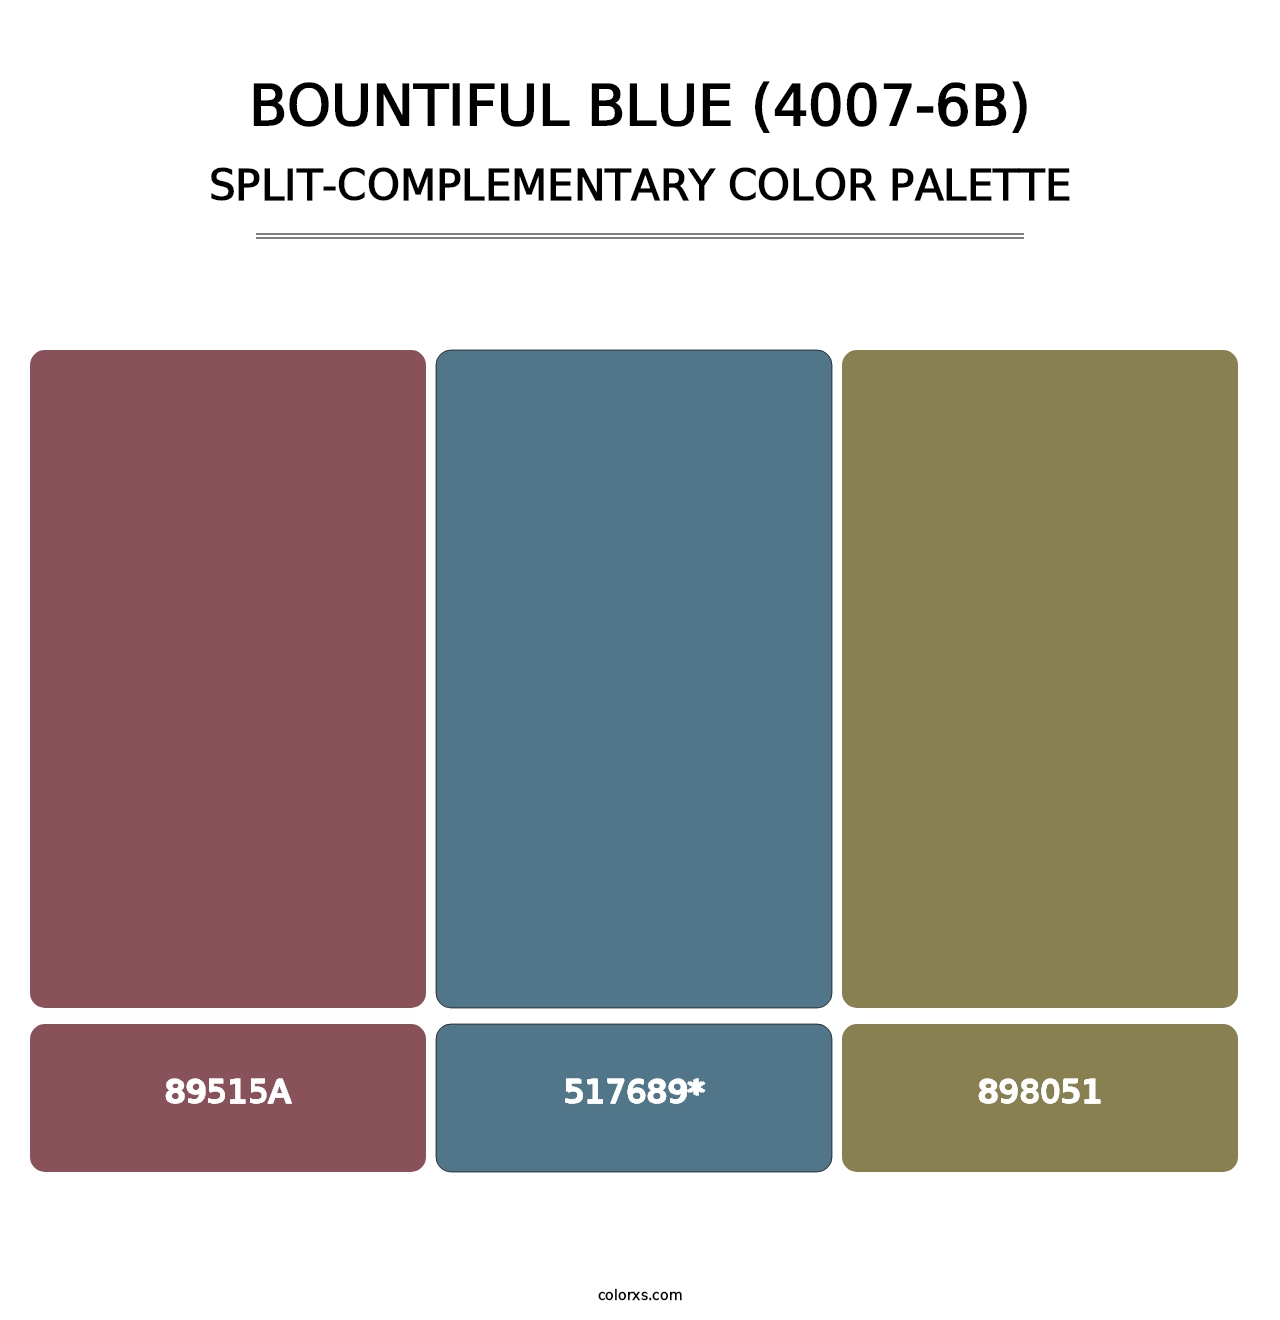 Bountiful Blue (4007-6B) - Split-Complementary Color Palette